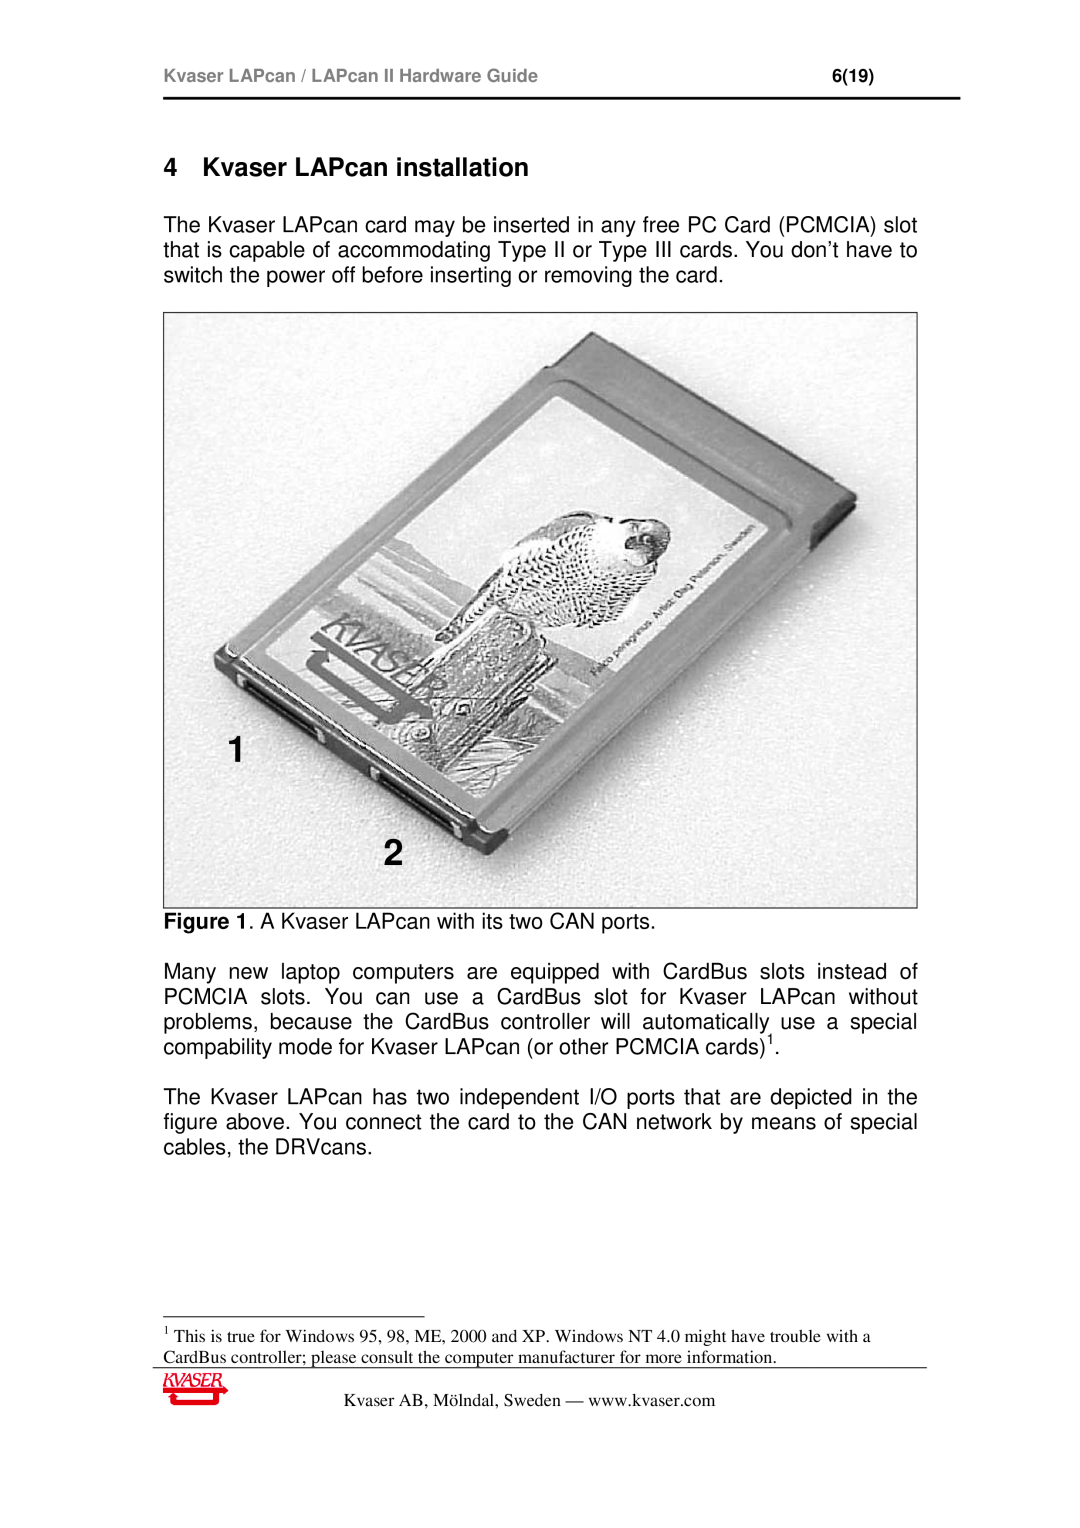 Philips Kvaser LAPcan II manual Kvaser LAPcan installation 